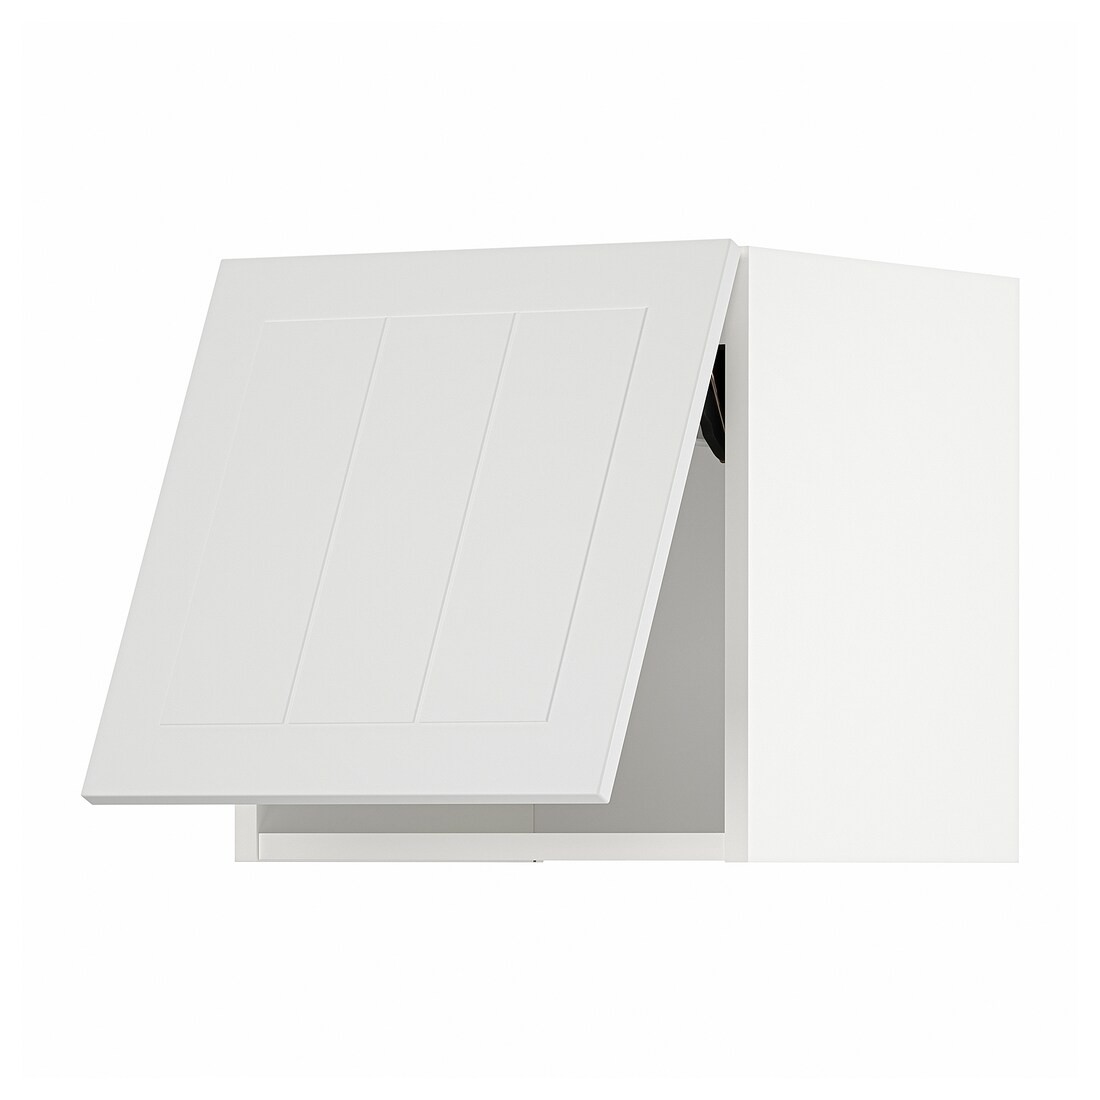 METOD МЕТОД Навесной горизонтальный шкаф, нажимной механизм, белый / Stensund белый, 40x40 см